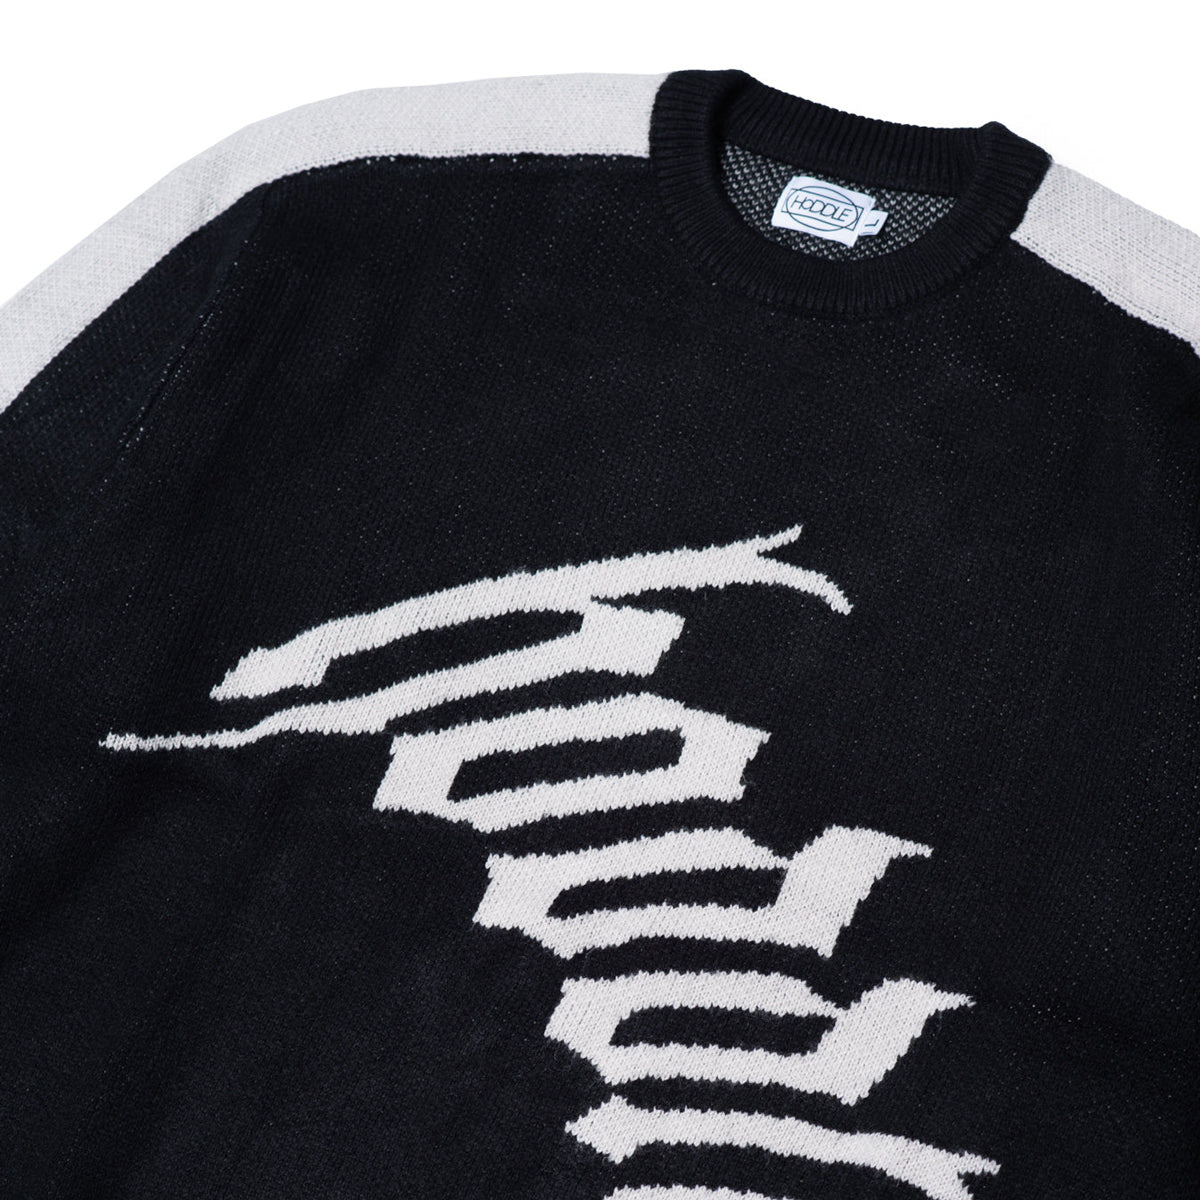 Hoddle Warped Logo Knit Shirt - Black/Grey image 2